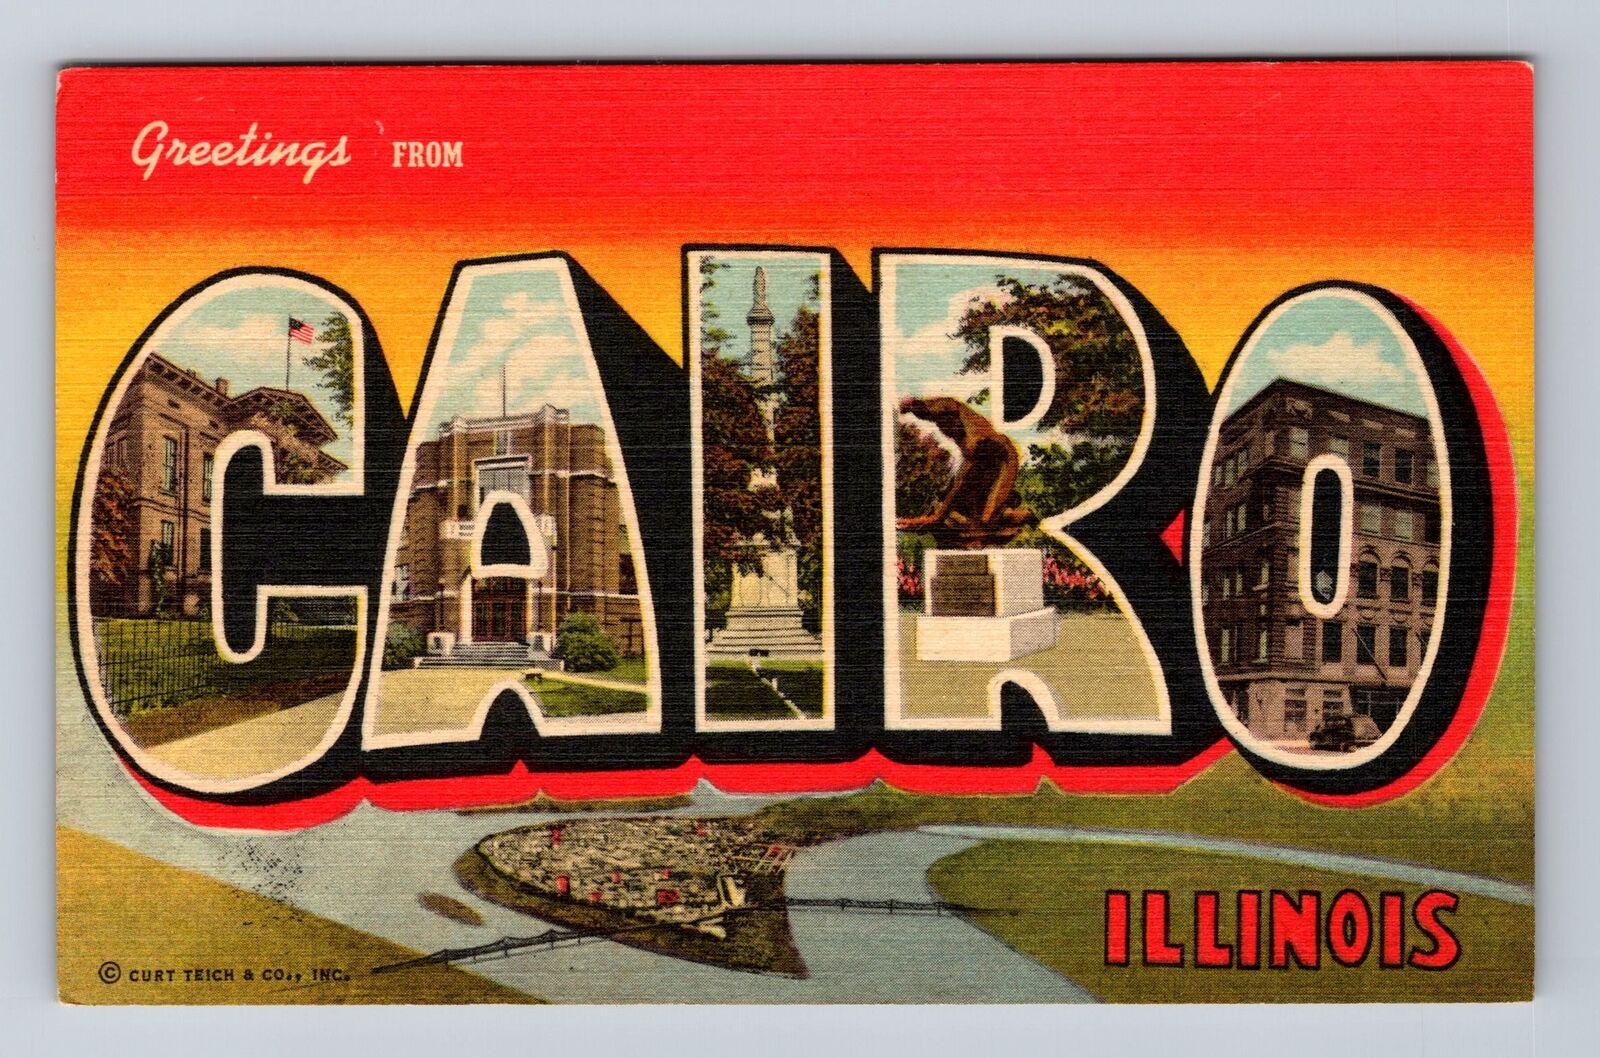 Cairo IL-Illinois, Scenic LARGE LETTER GREETINGS, Antique Vintage Postcard